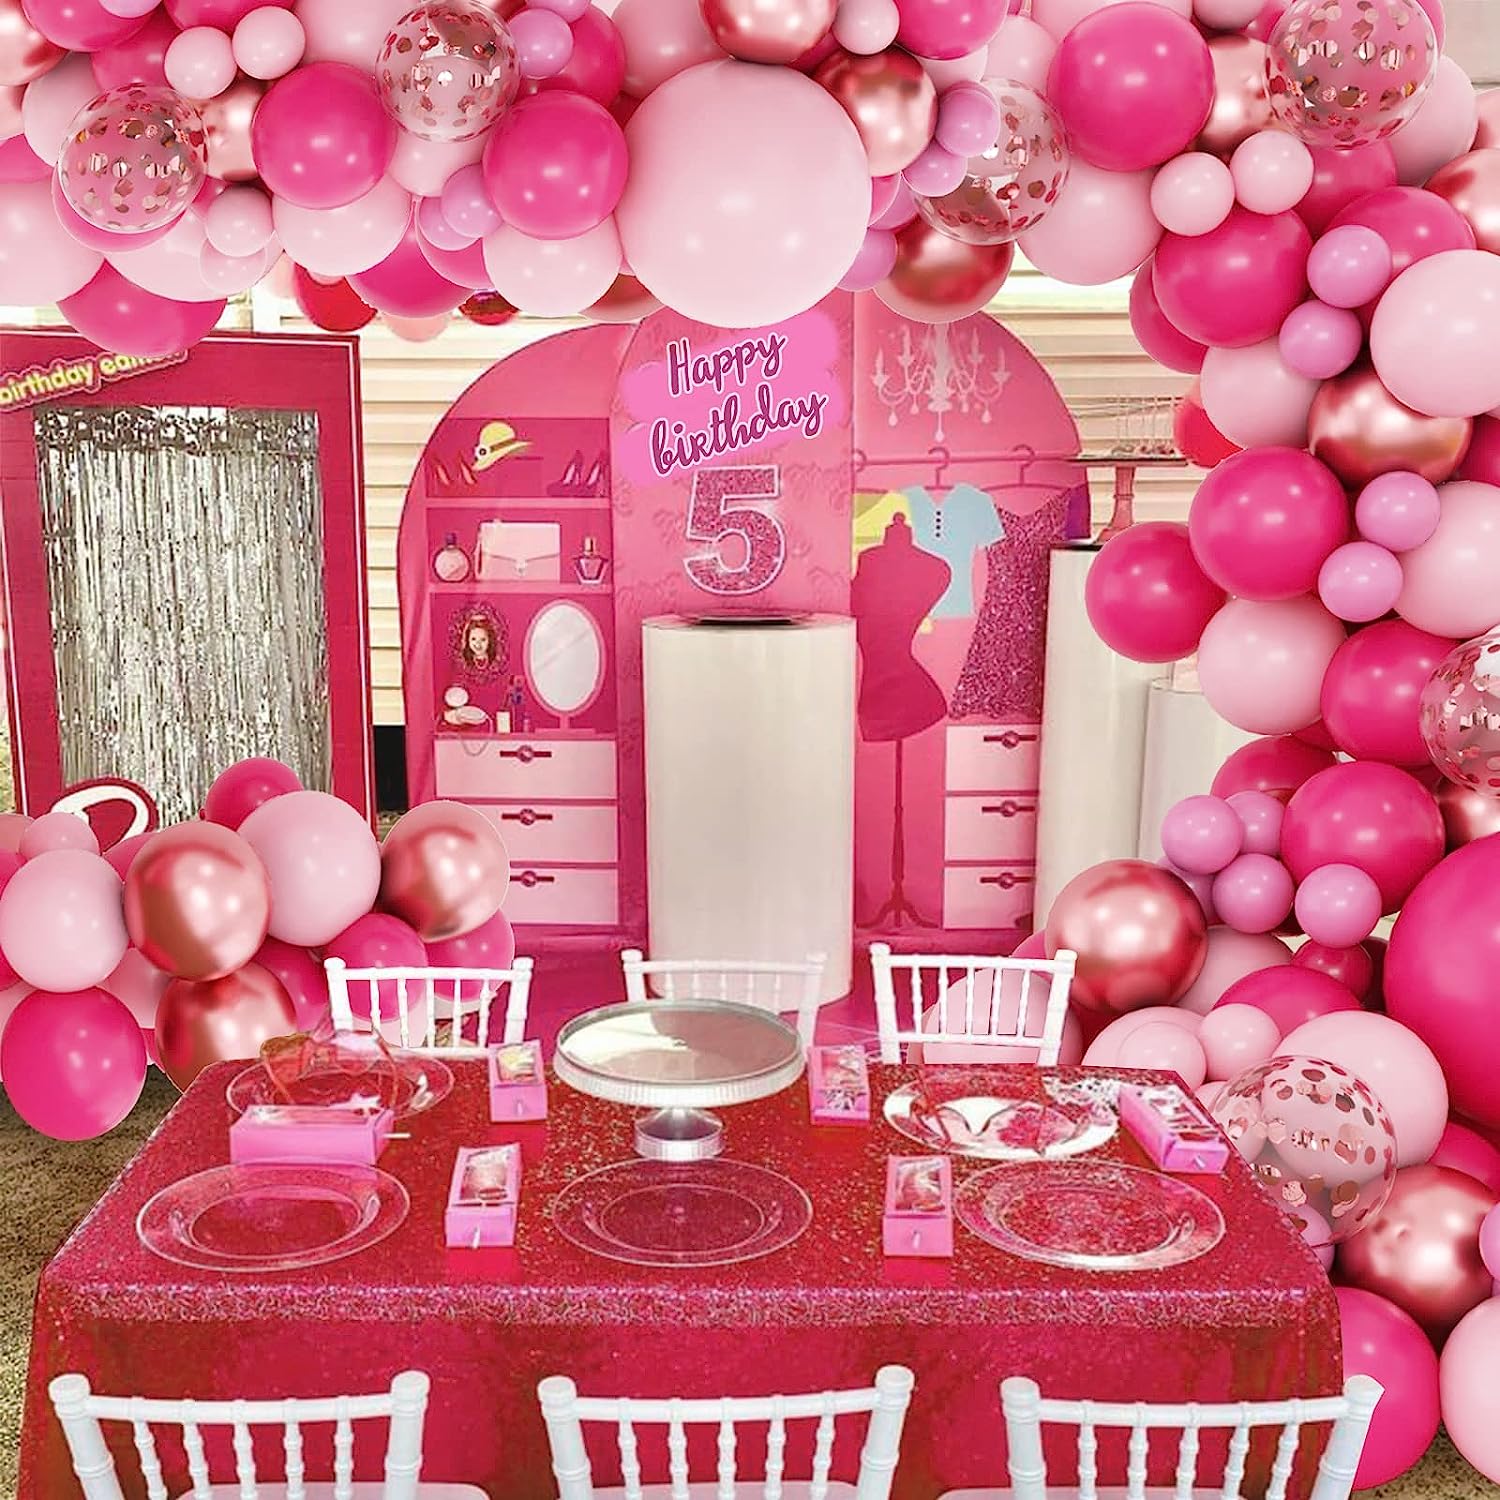 Rose morning X013 160 pcs pink balloon set for birthday, wedding anniversary, valentine&